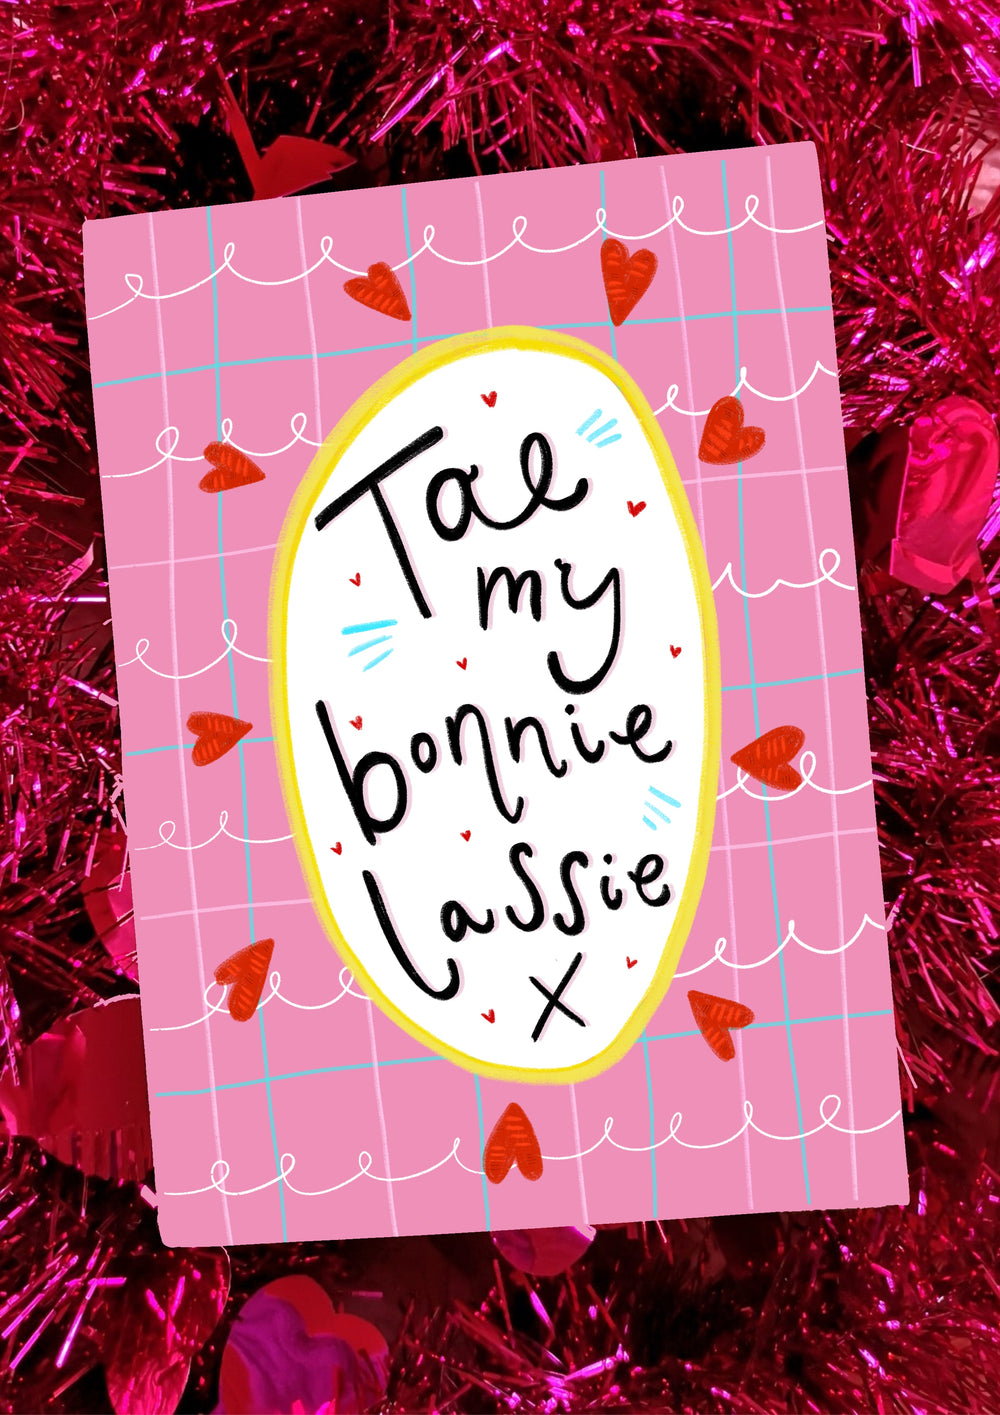 Tae my bonnie lassie! Greetings Card